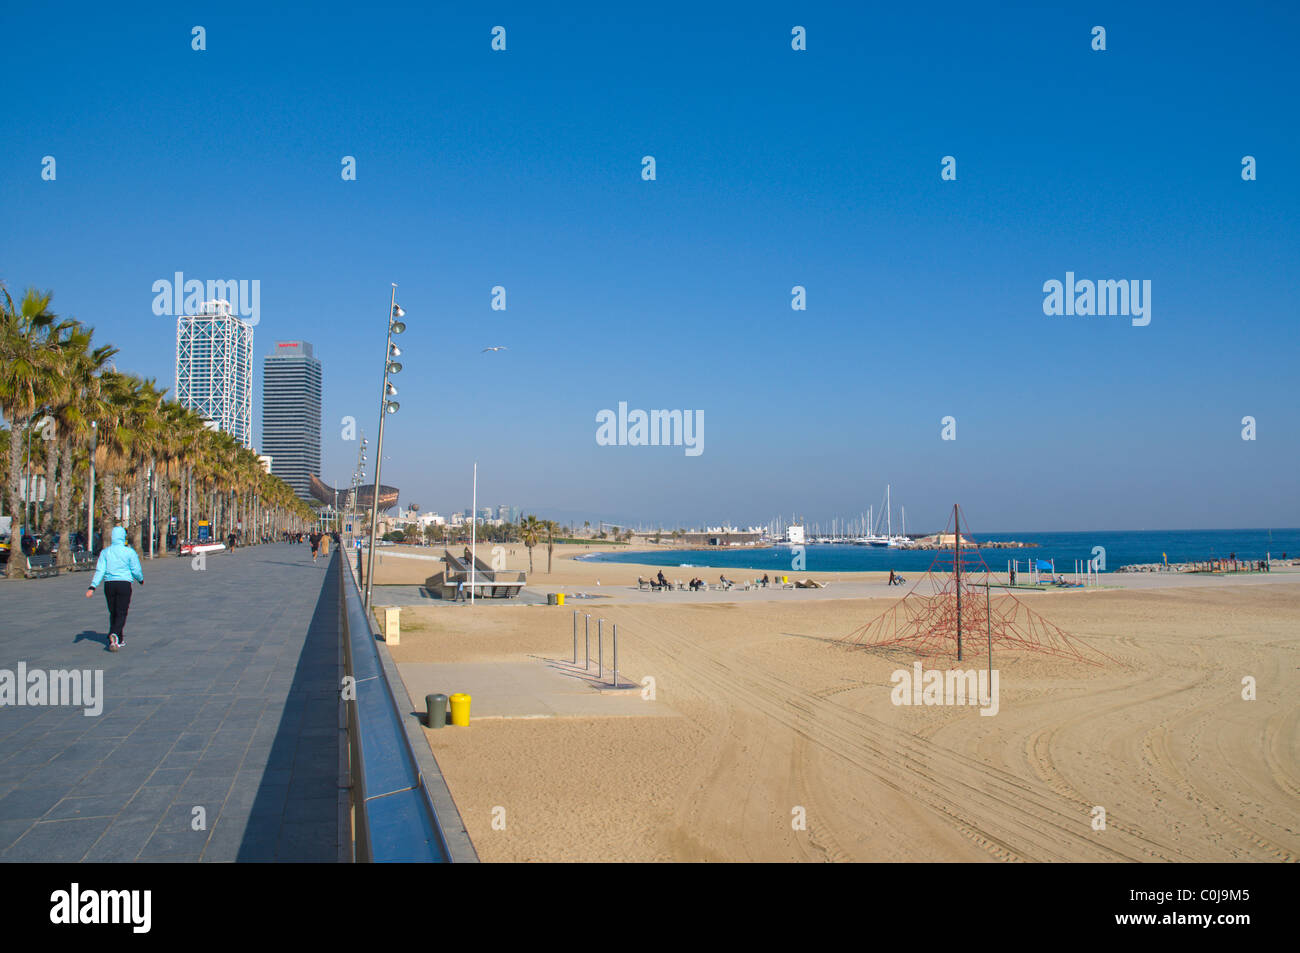 Plaja de la barceloneta beach hi-res stock photography and images - Alamy